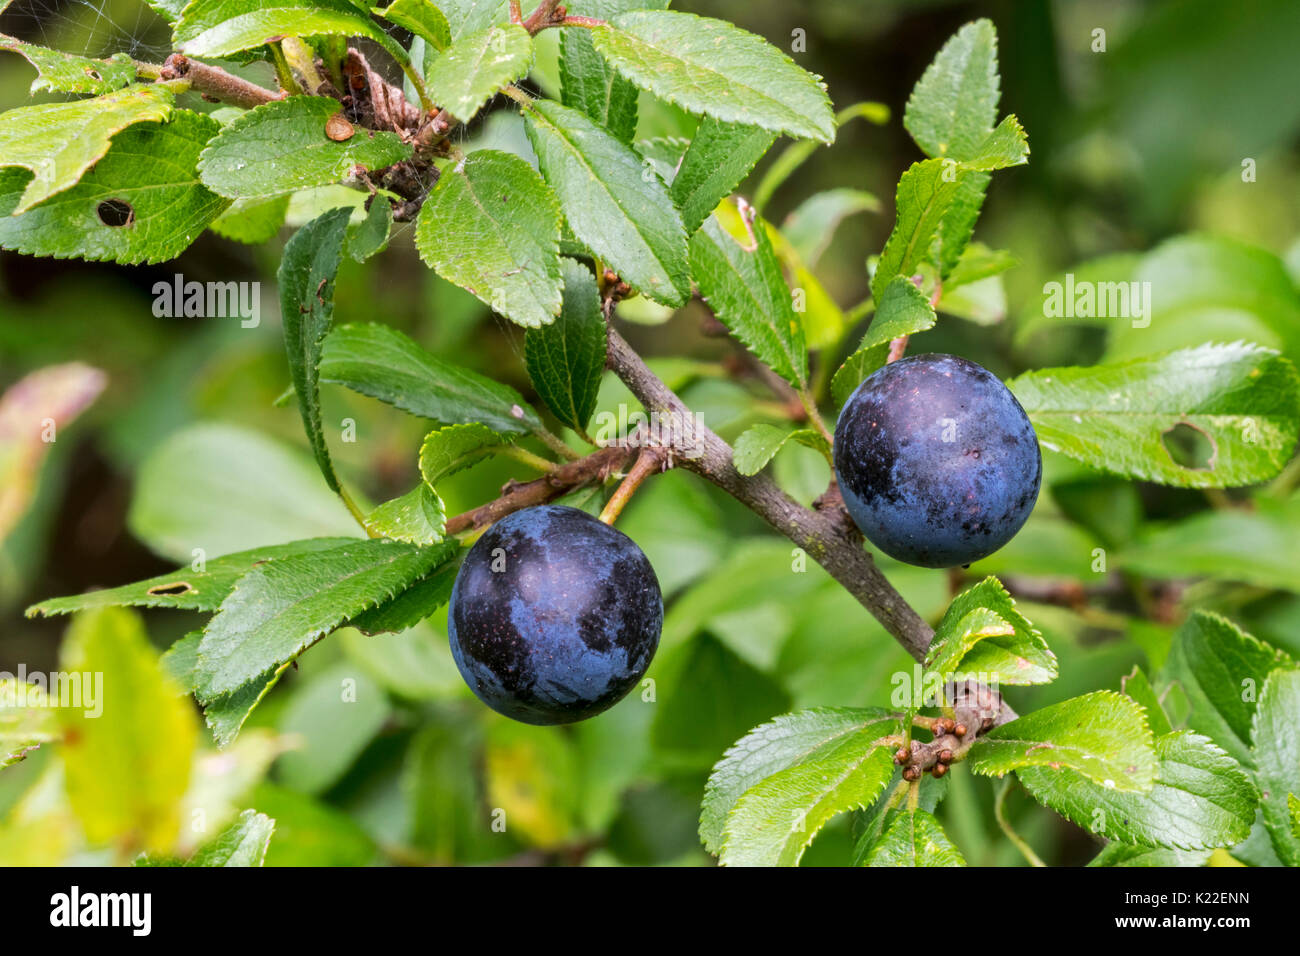 Blackthorn / sloe (Prunus spinosa) close up of black-blue berries / sloes / drupes and leaves Stock Photo